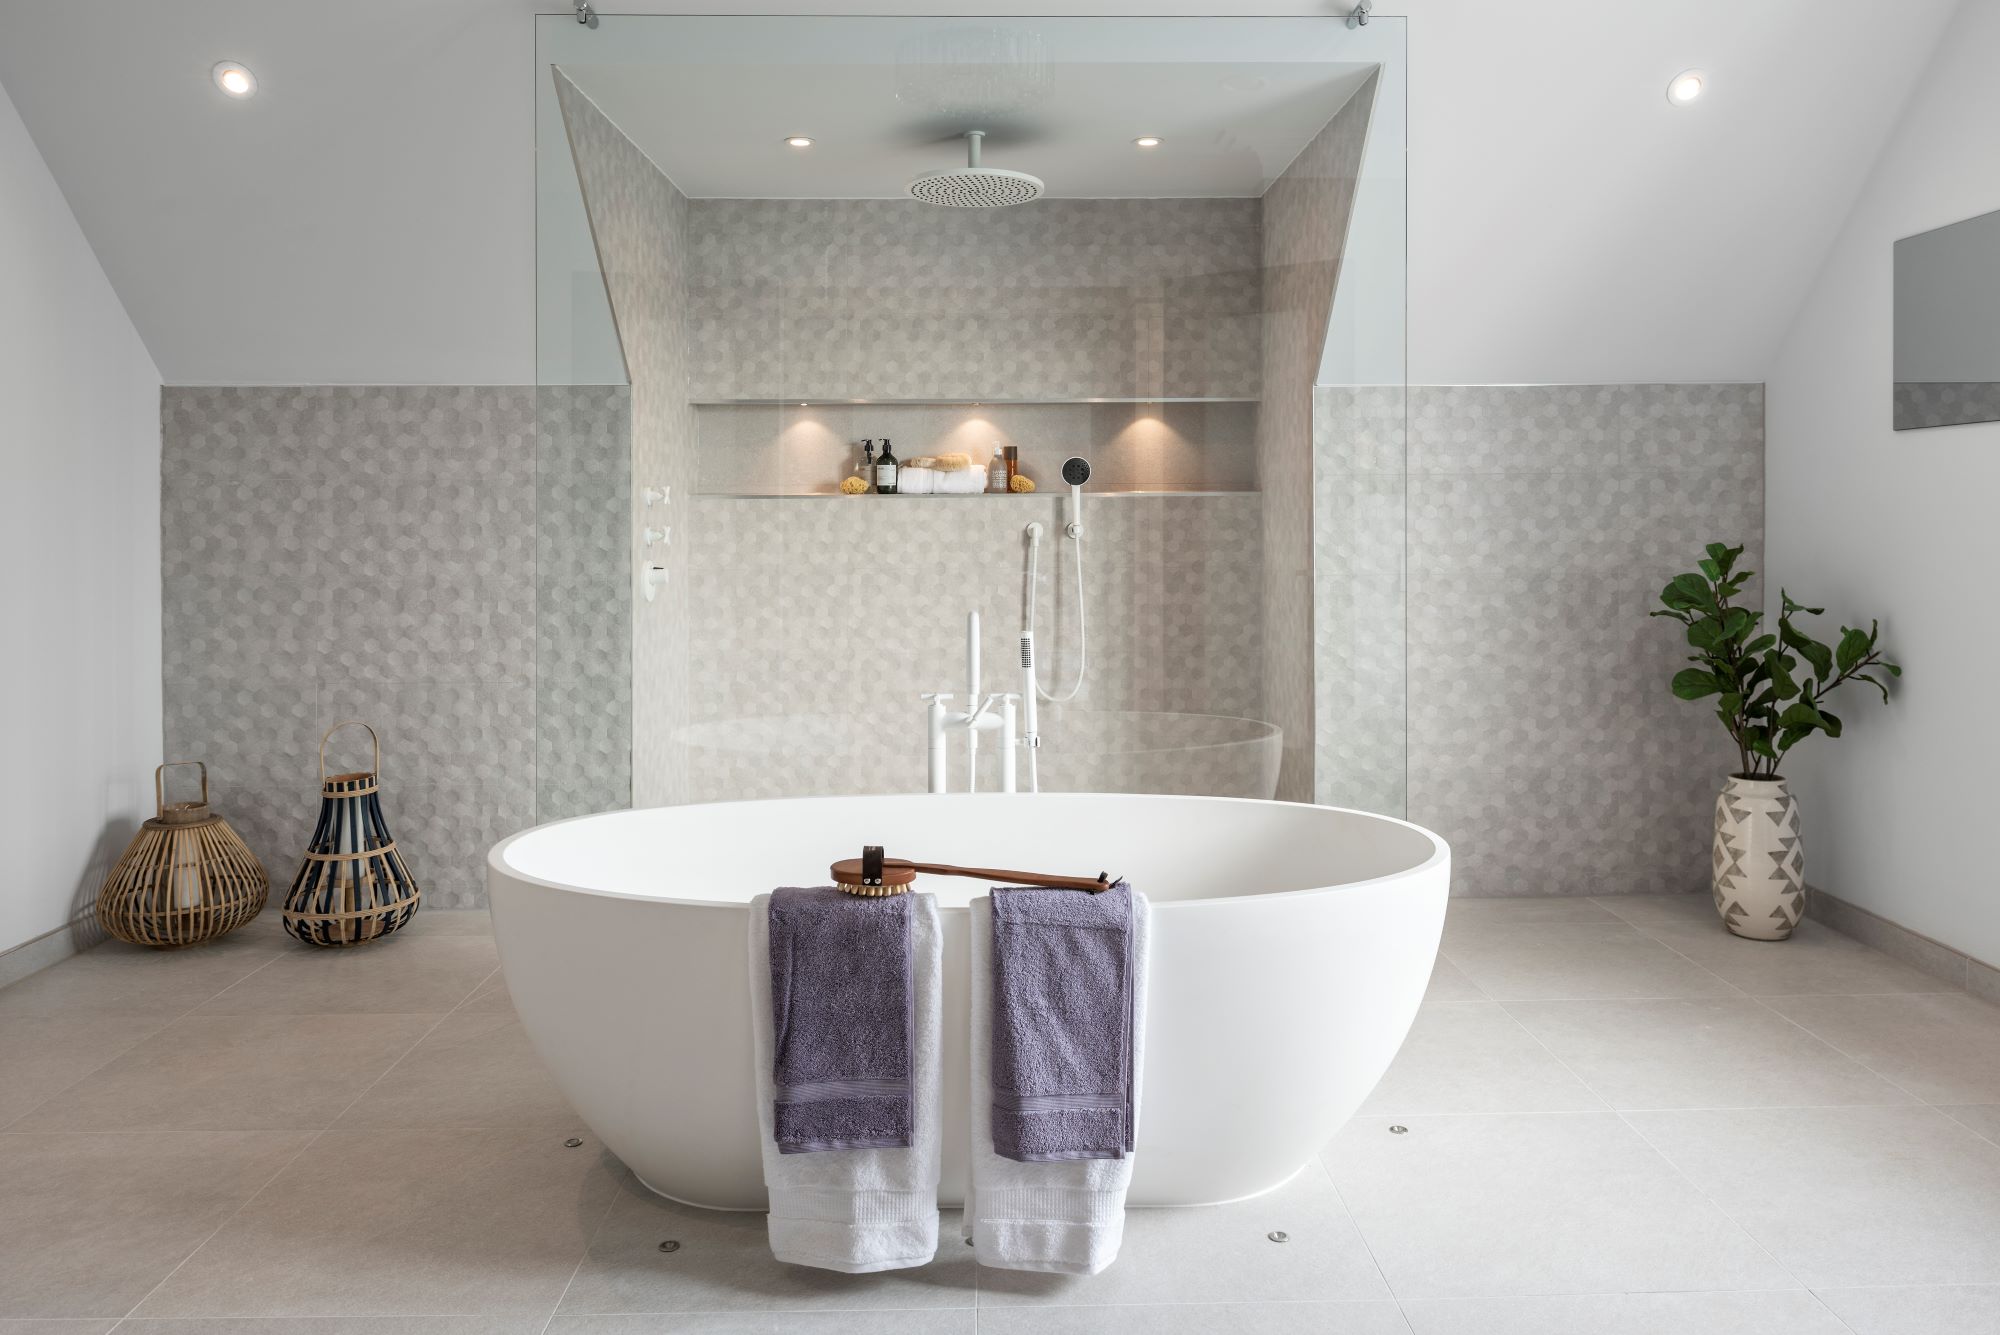 White bathroom design inspiration, the Dornbracht Tara freestanding bath mixer in white